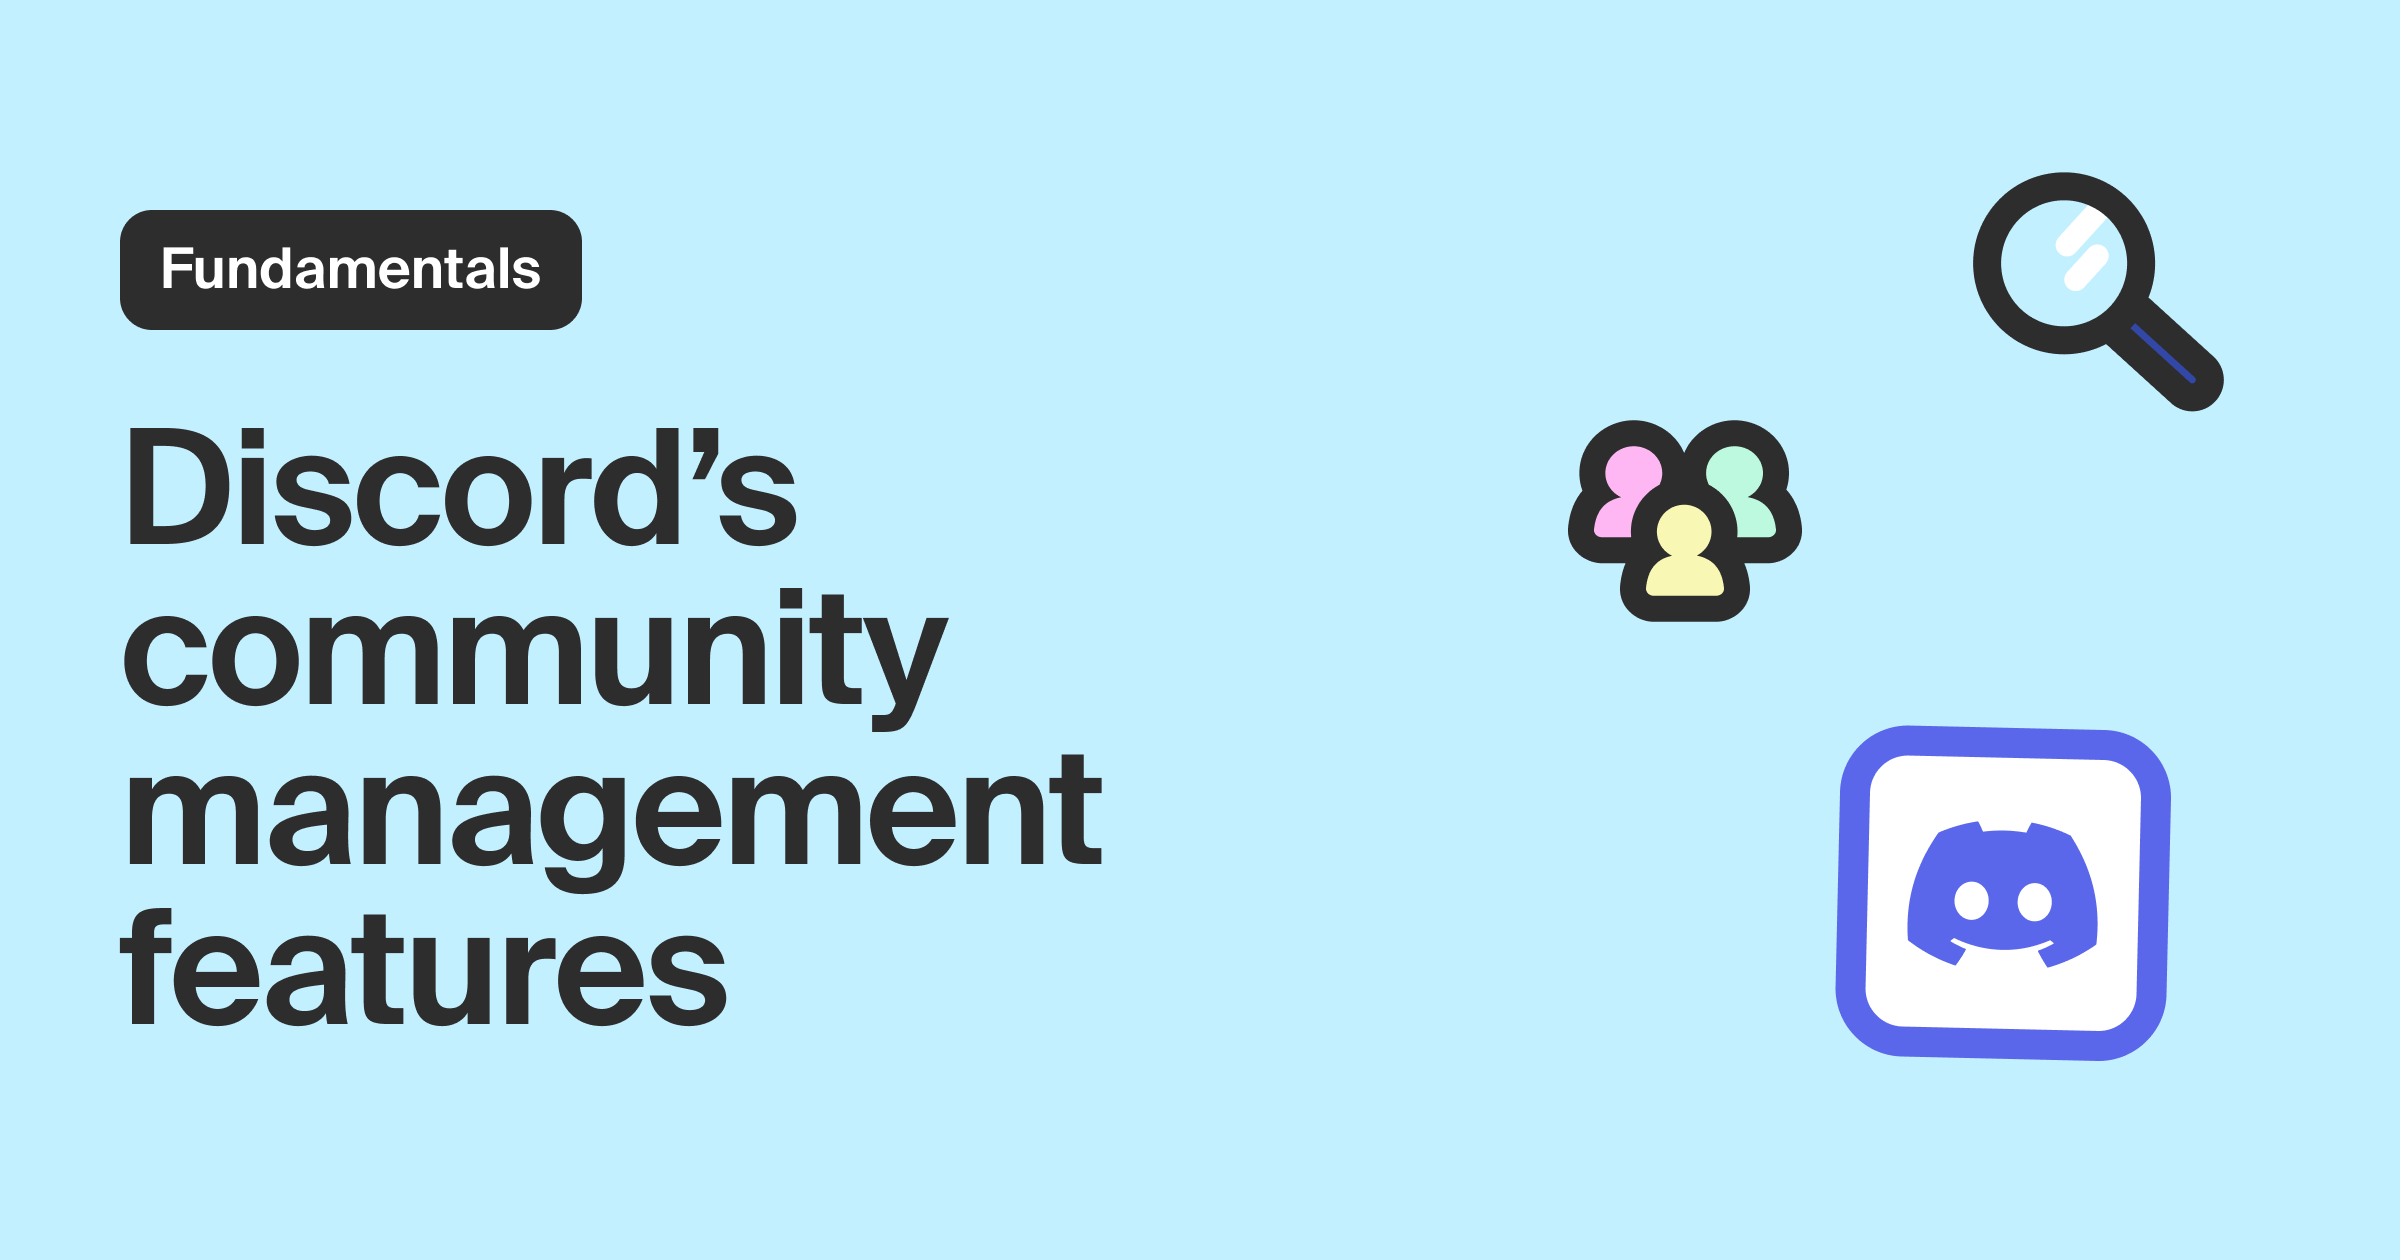 Discord's community management features